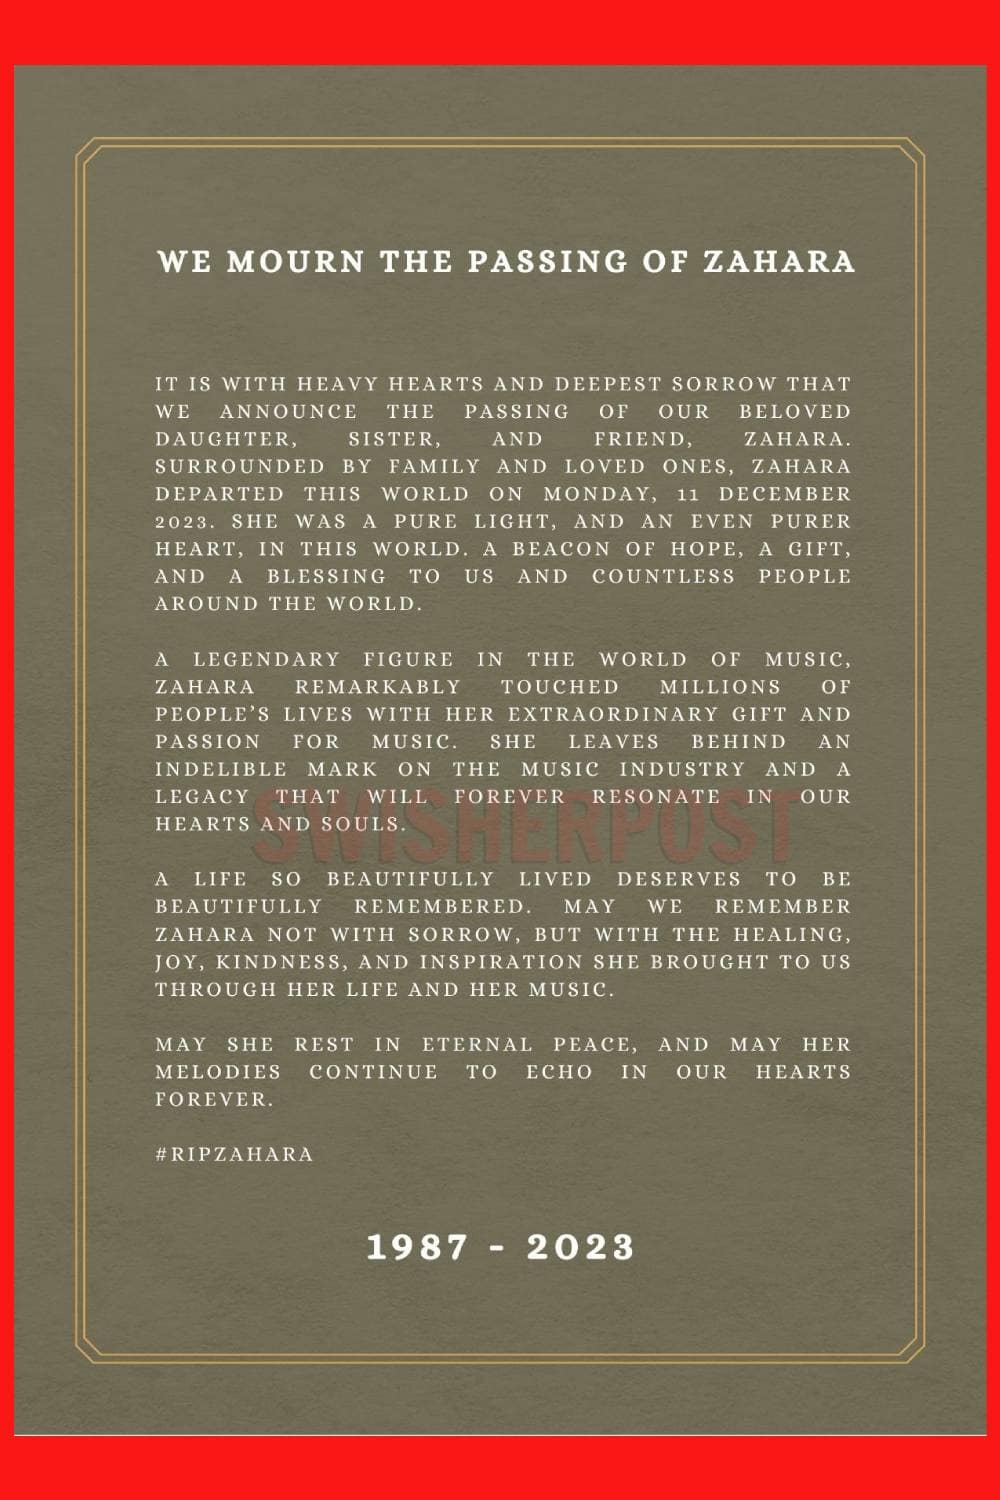 zahara funeral memorial service family statement